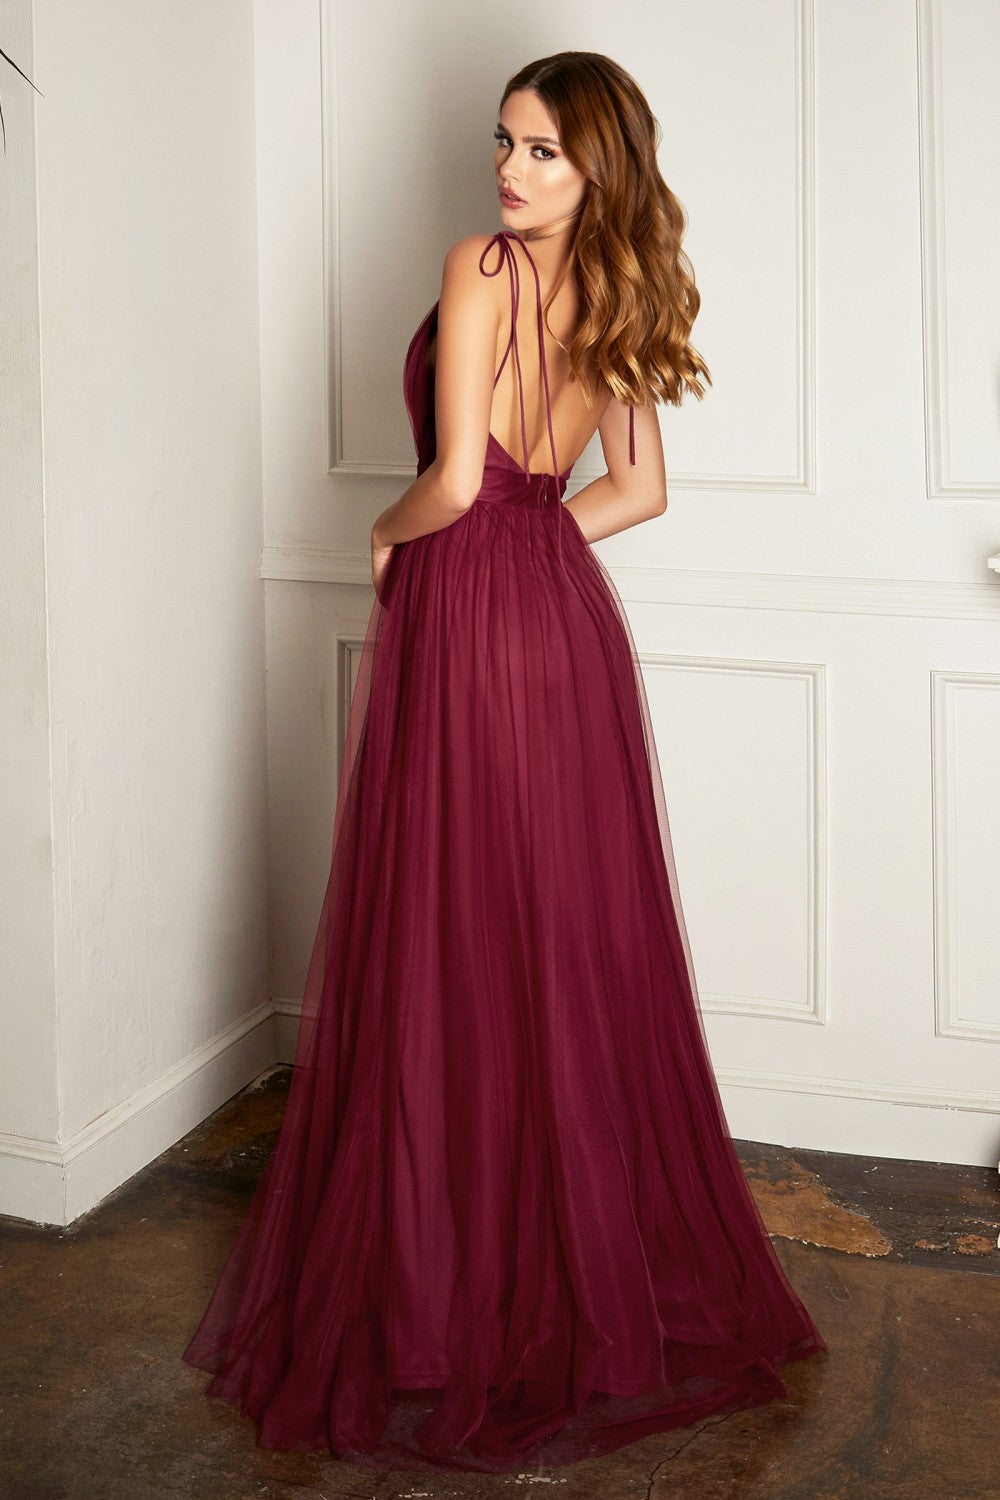 Elegant Tender Bridesmaid Dresses: 3 - S1 M1 L1, V-neckline Bodice, Open Back, Soft A-line Skirt-smcdress